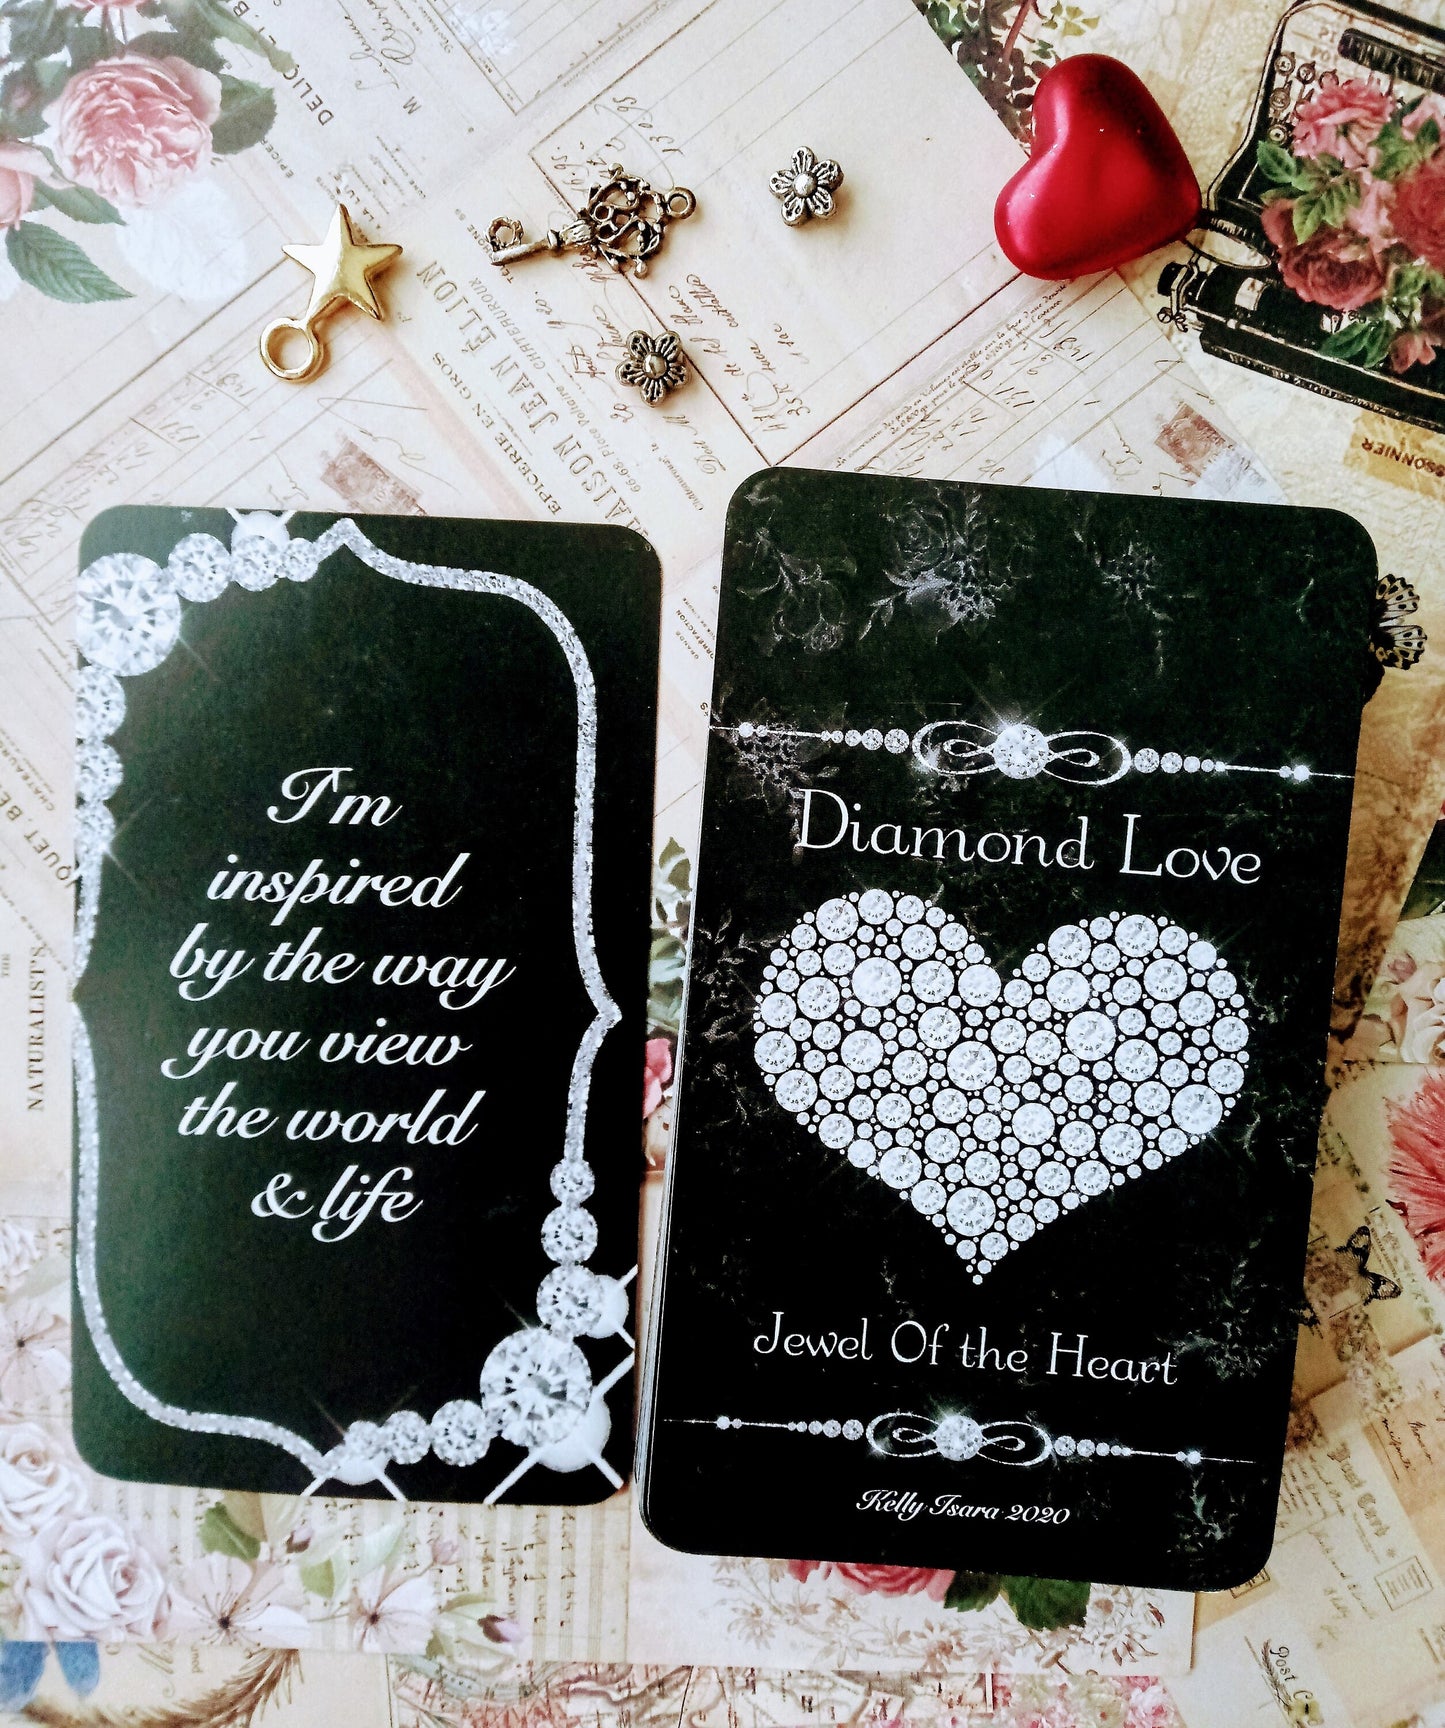 Diamond Love~ Jewel Of the Heart